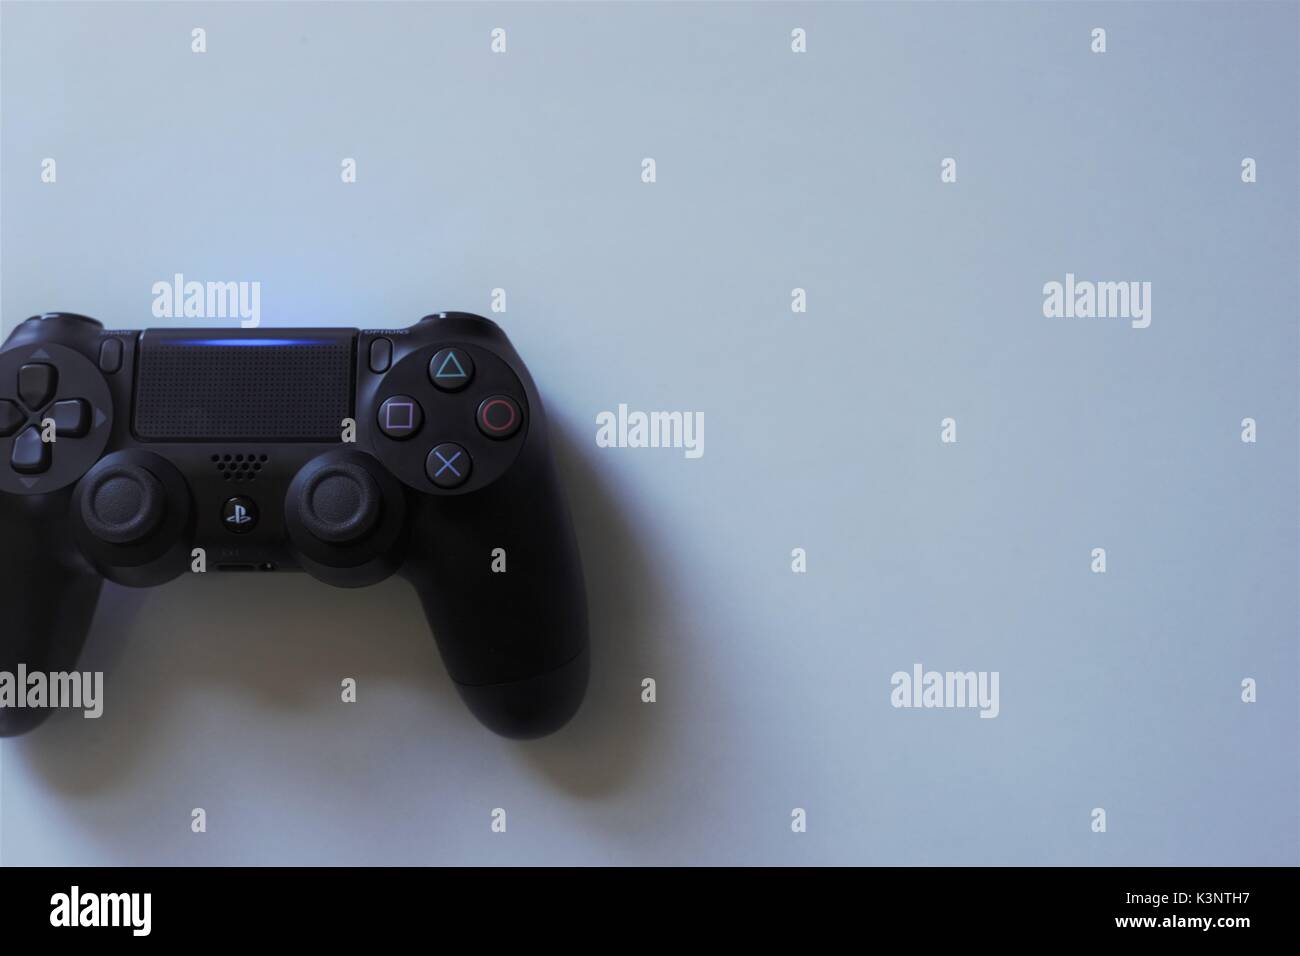 PS4-Controller Stockfotografie - Alamy